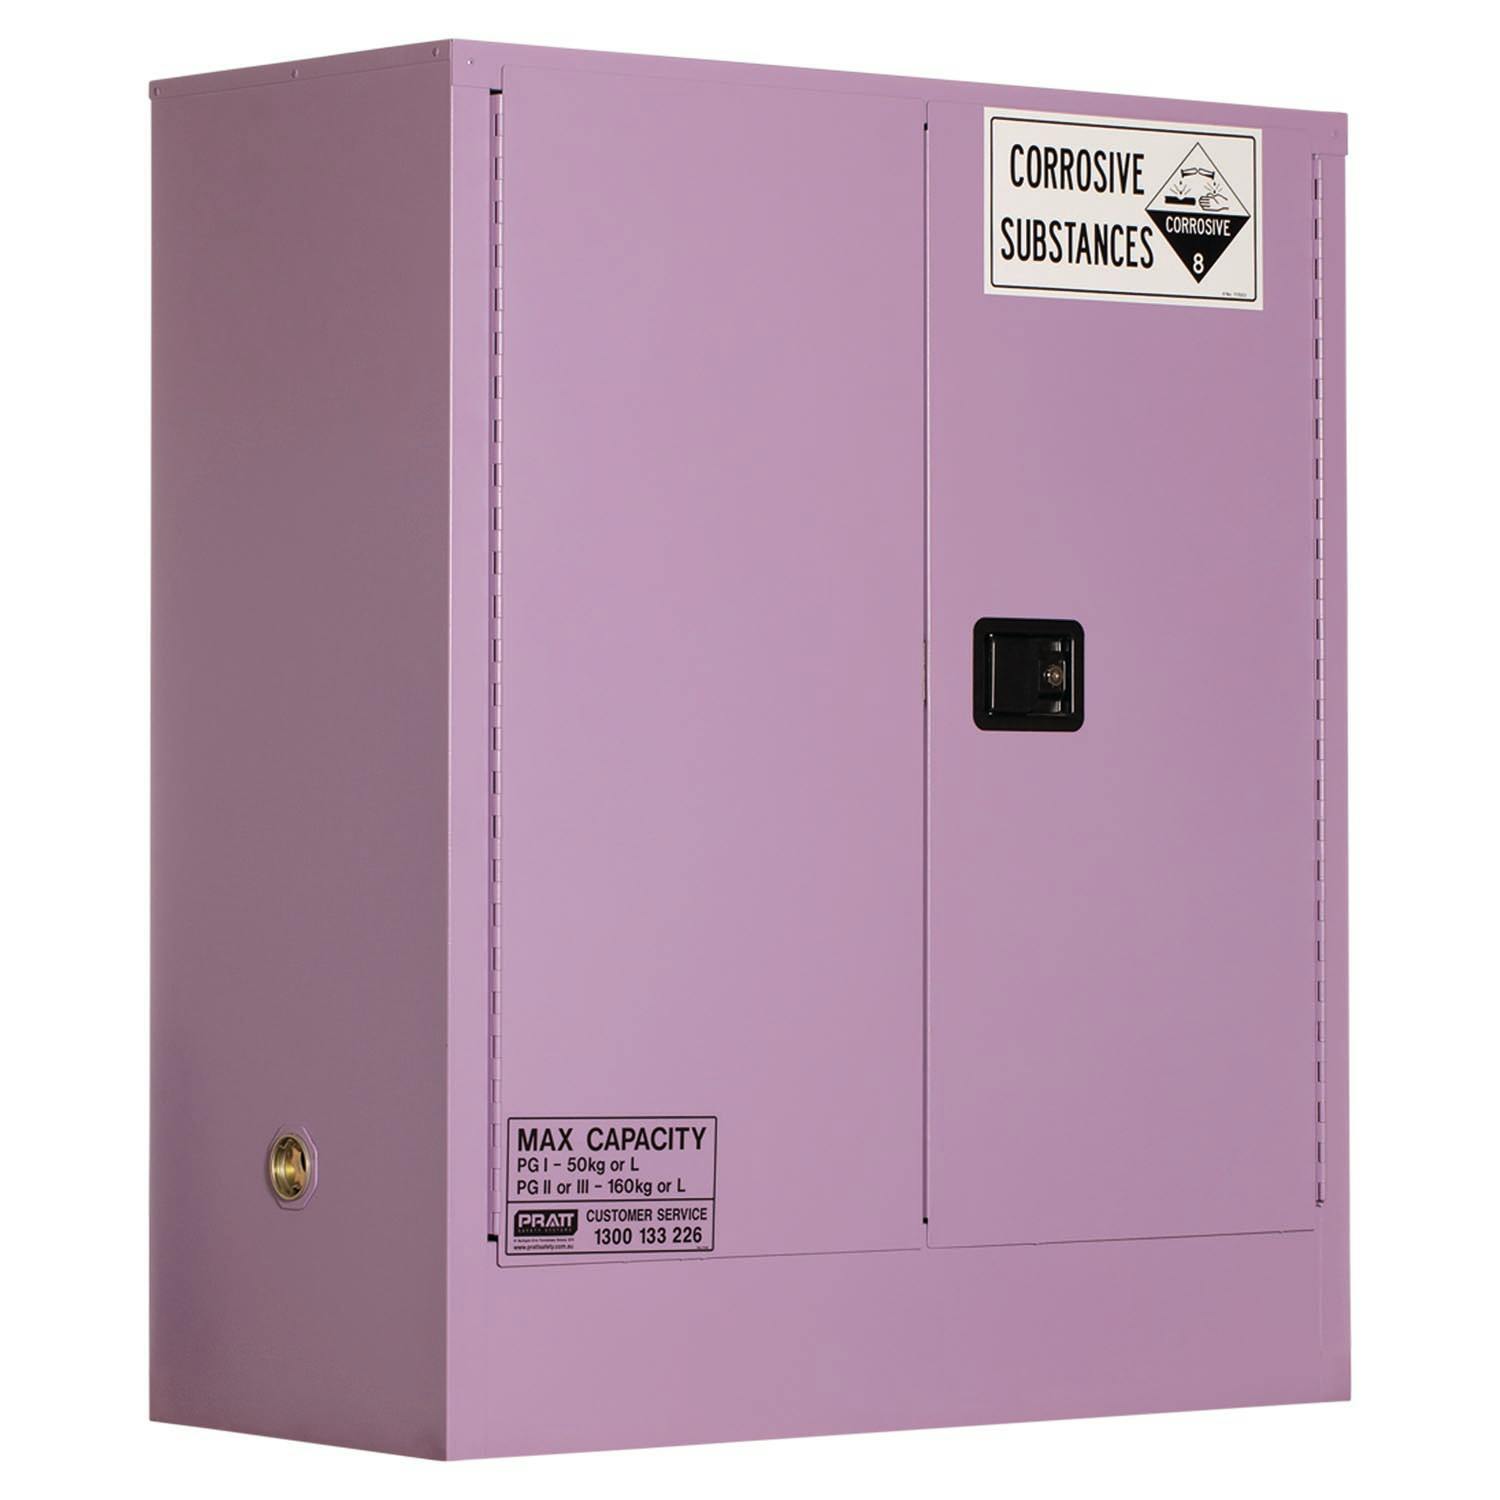 Pratt Corrosive Substance Storage Cabinet: Metal - 160L - 2 Doors - 2 Shelves